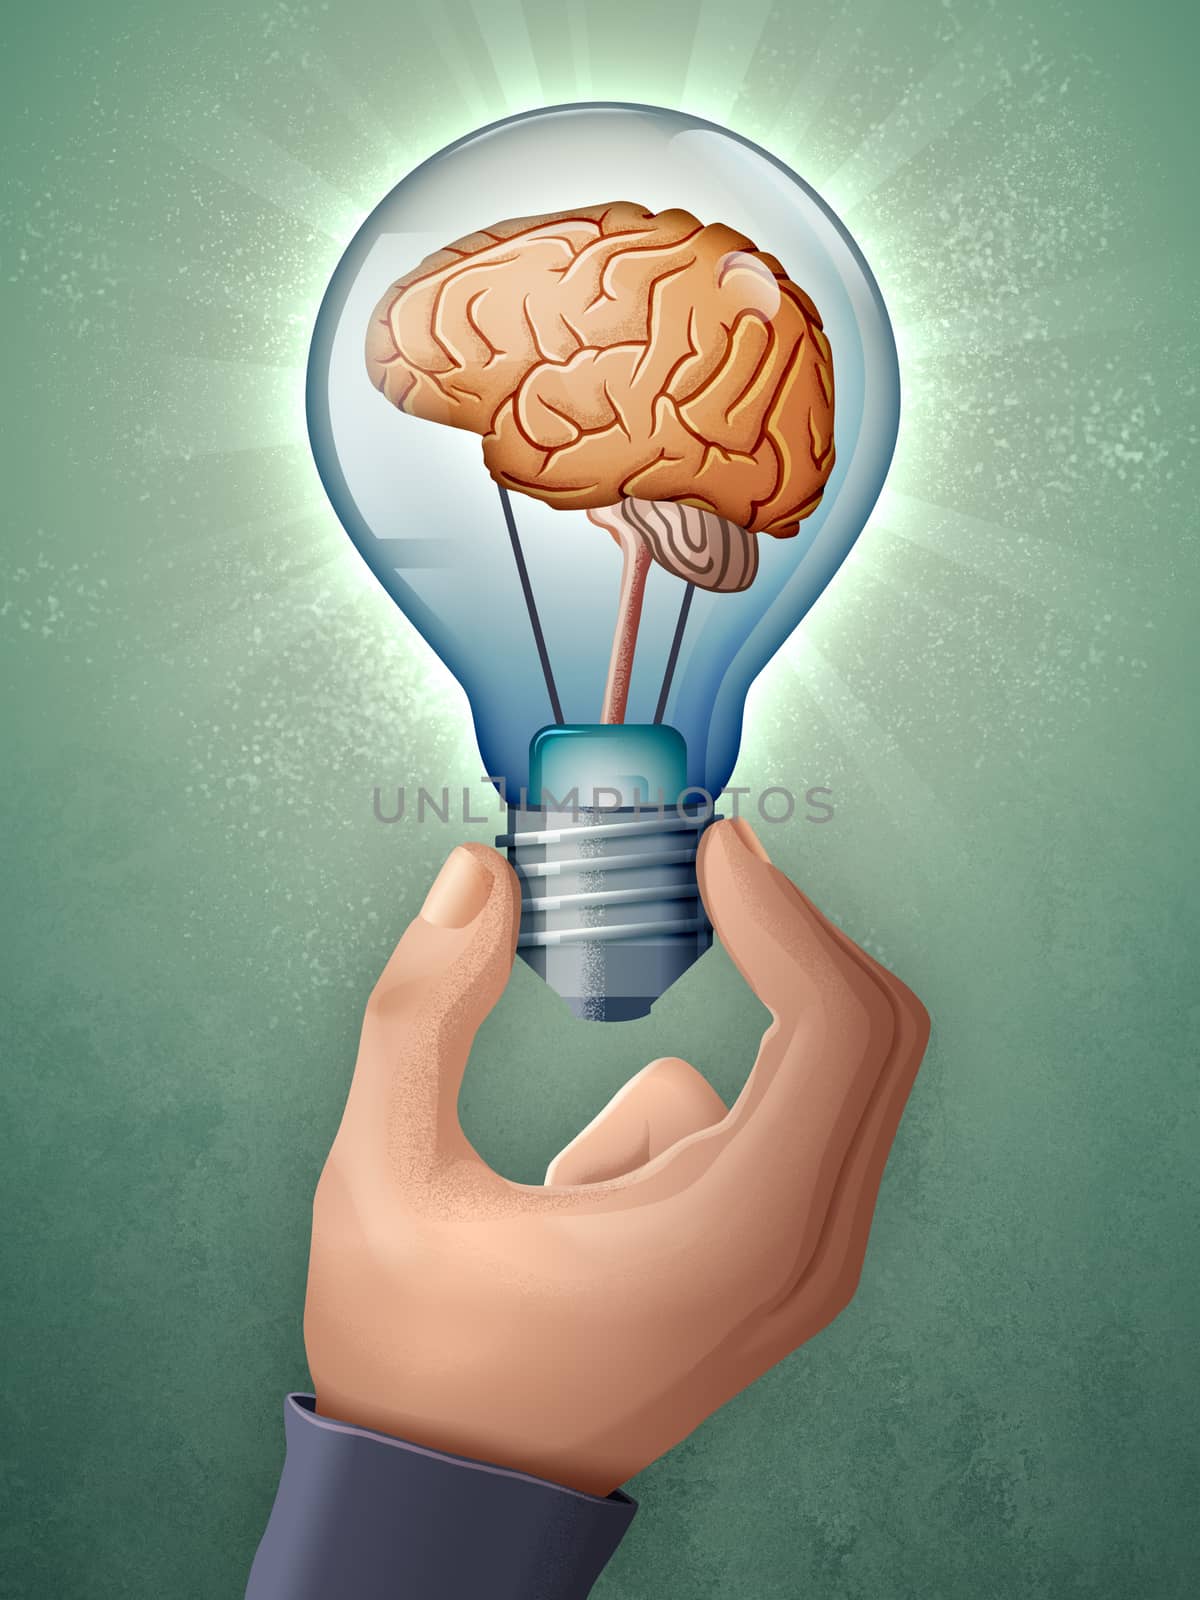 Human brain inside a lightbulb. Digital illustration.